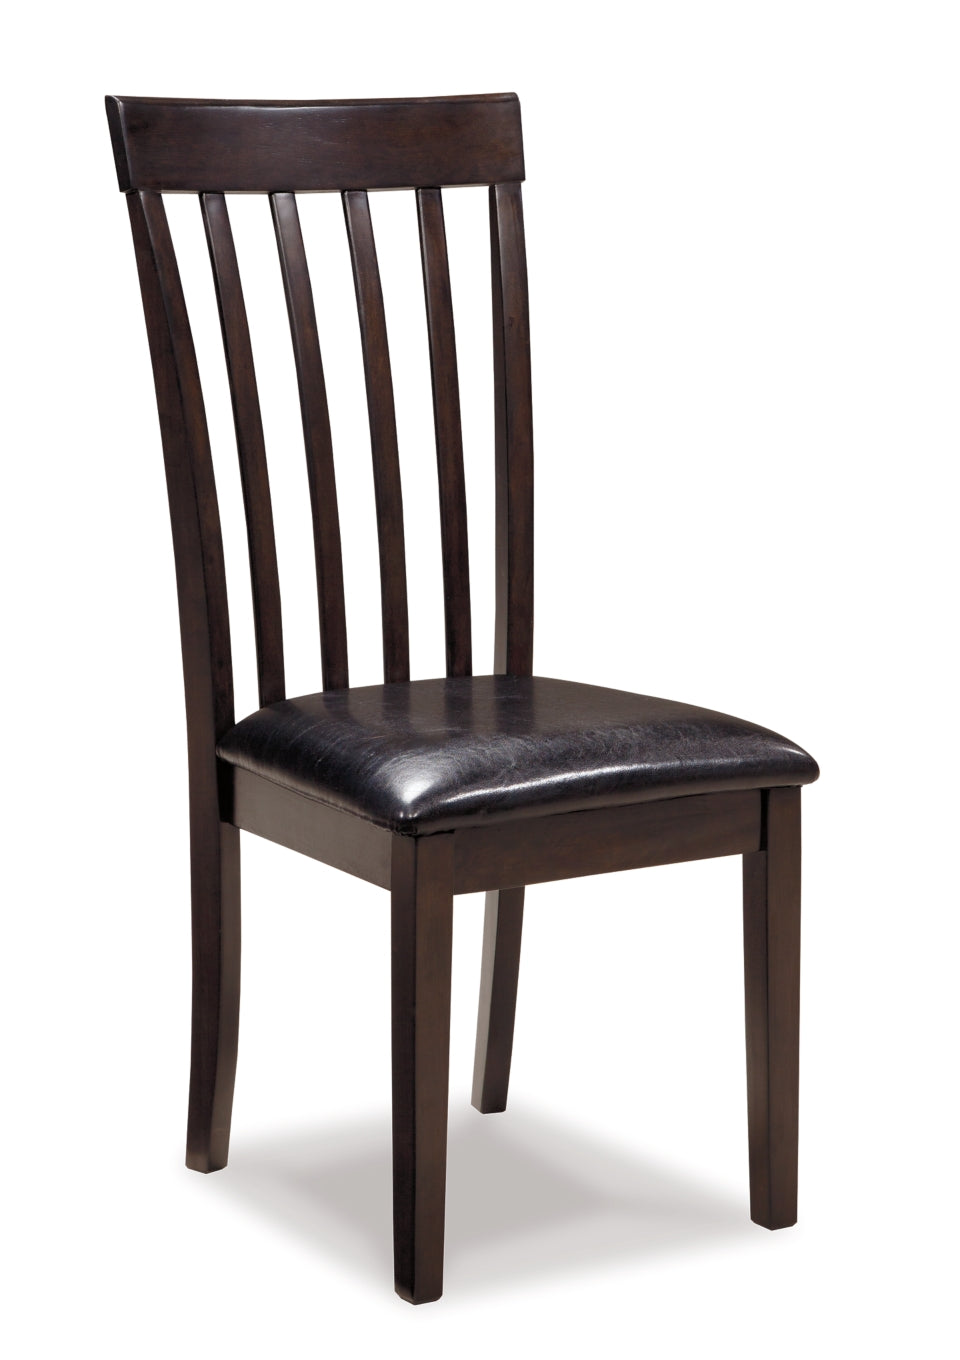 Hammis 2-Piece Dining Room Chair